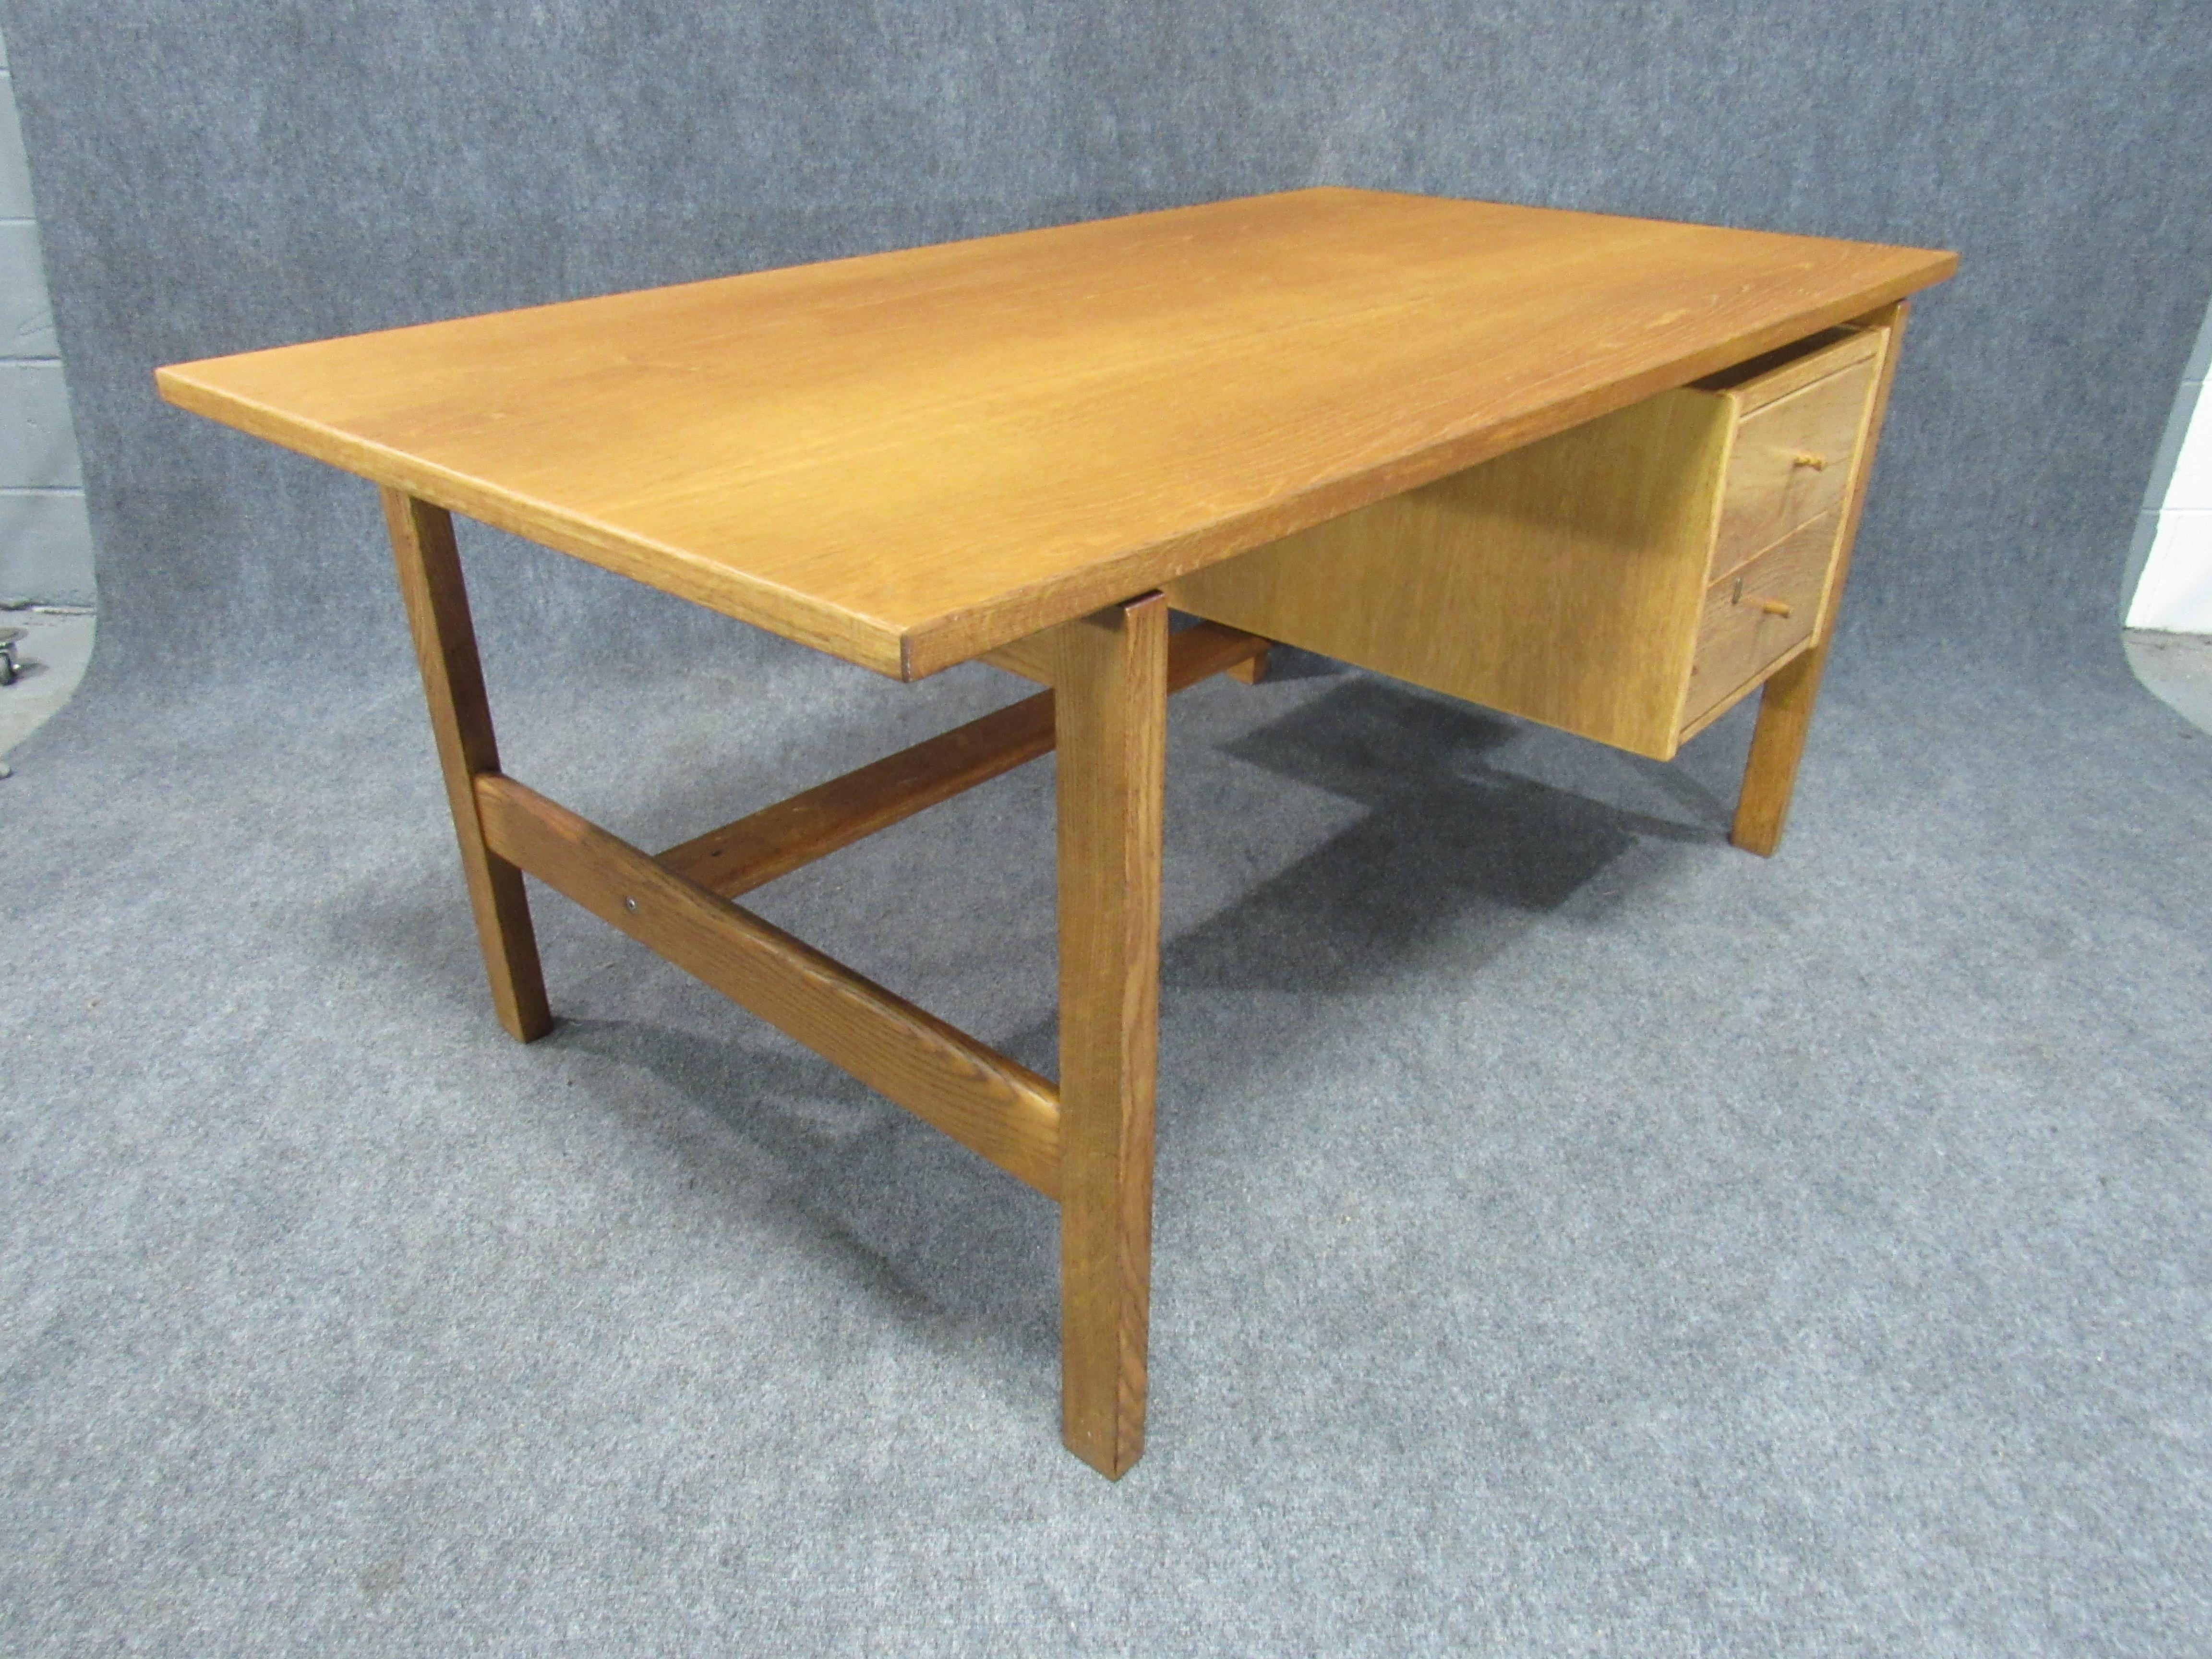 Midcentury Danish modern model 156 oak desk by Hans Wegner for GETAMA professionally restored. Simple yet elegant style will be the center piece of any home office or den.